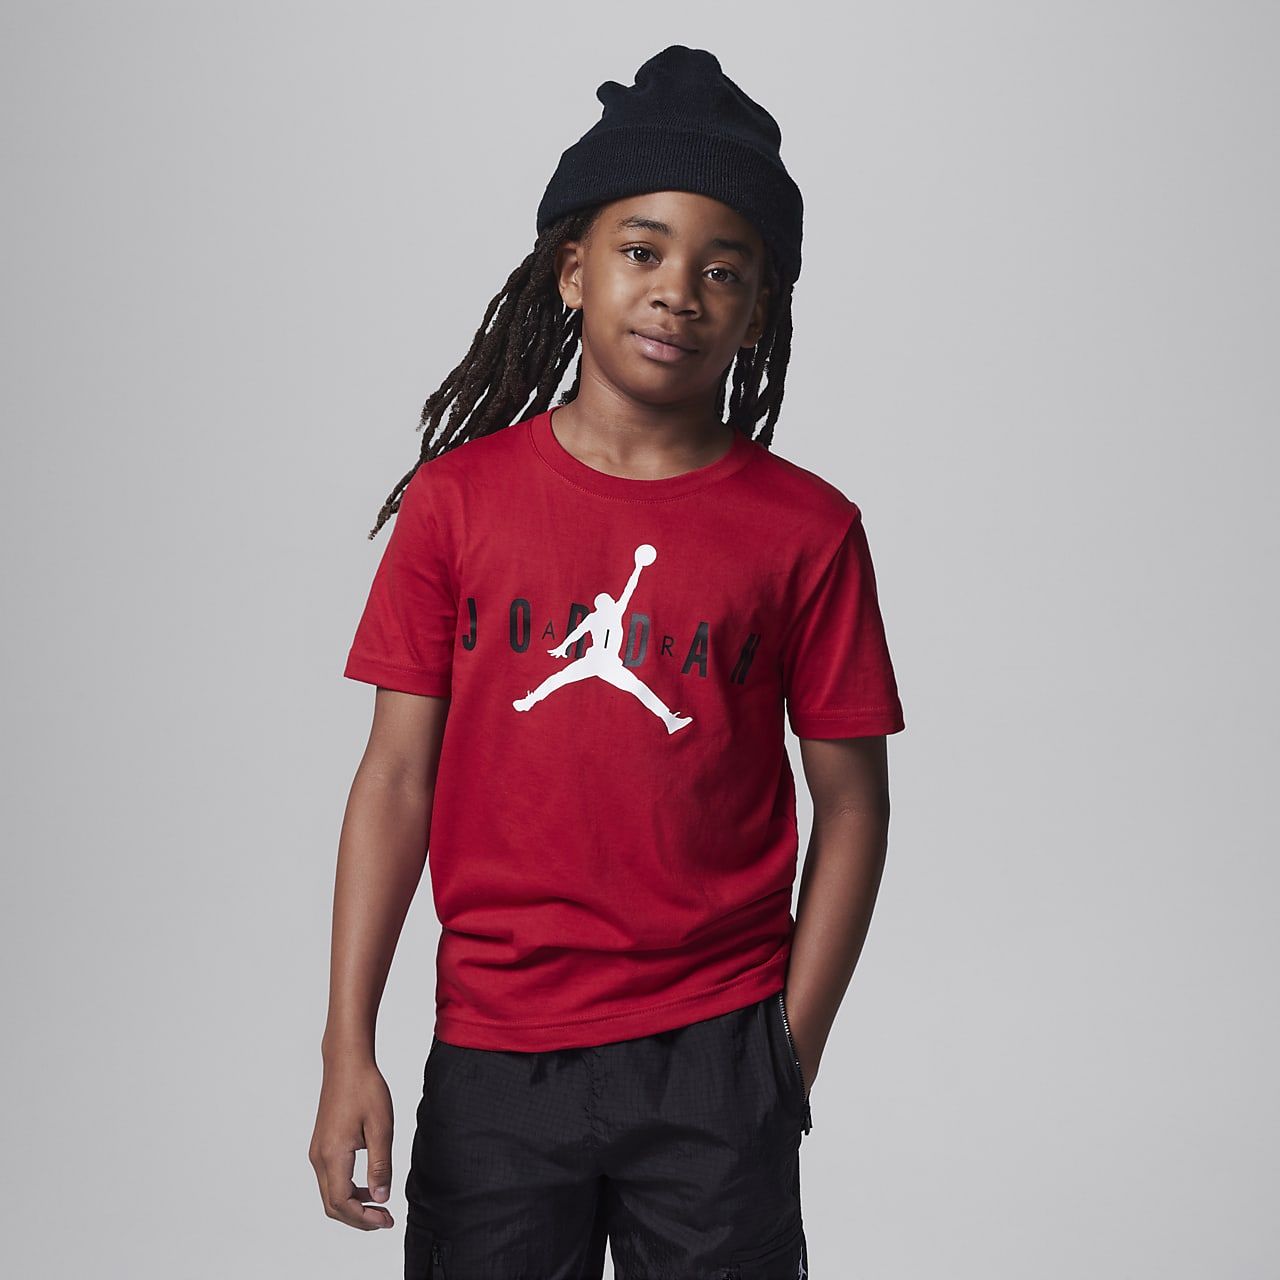 Big Kids' T-Shirt | Nike (US)